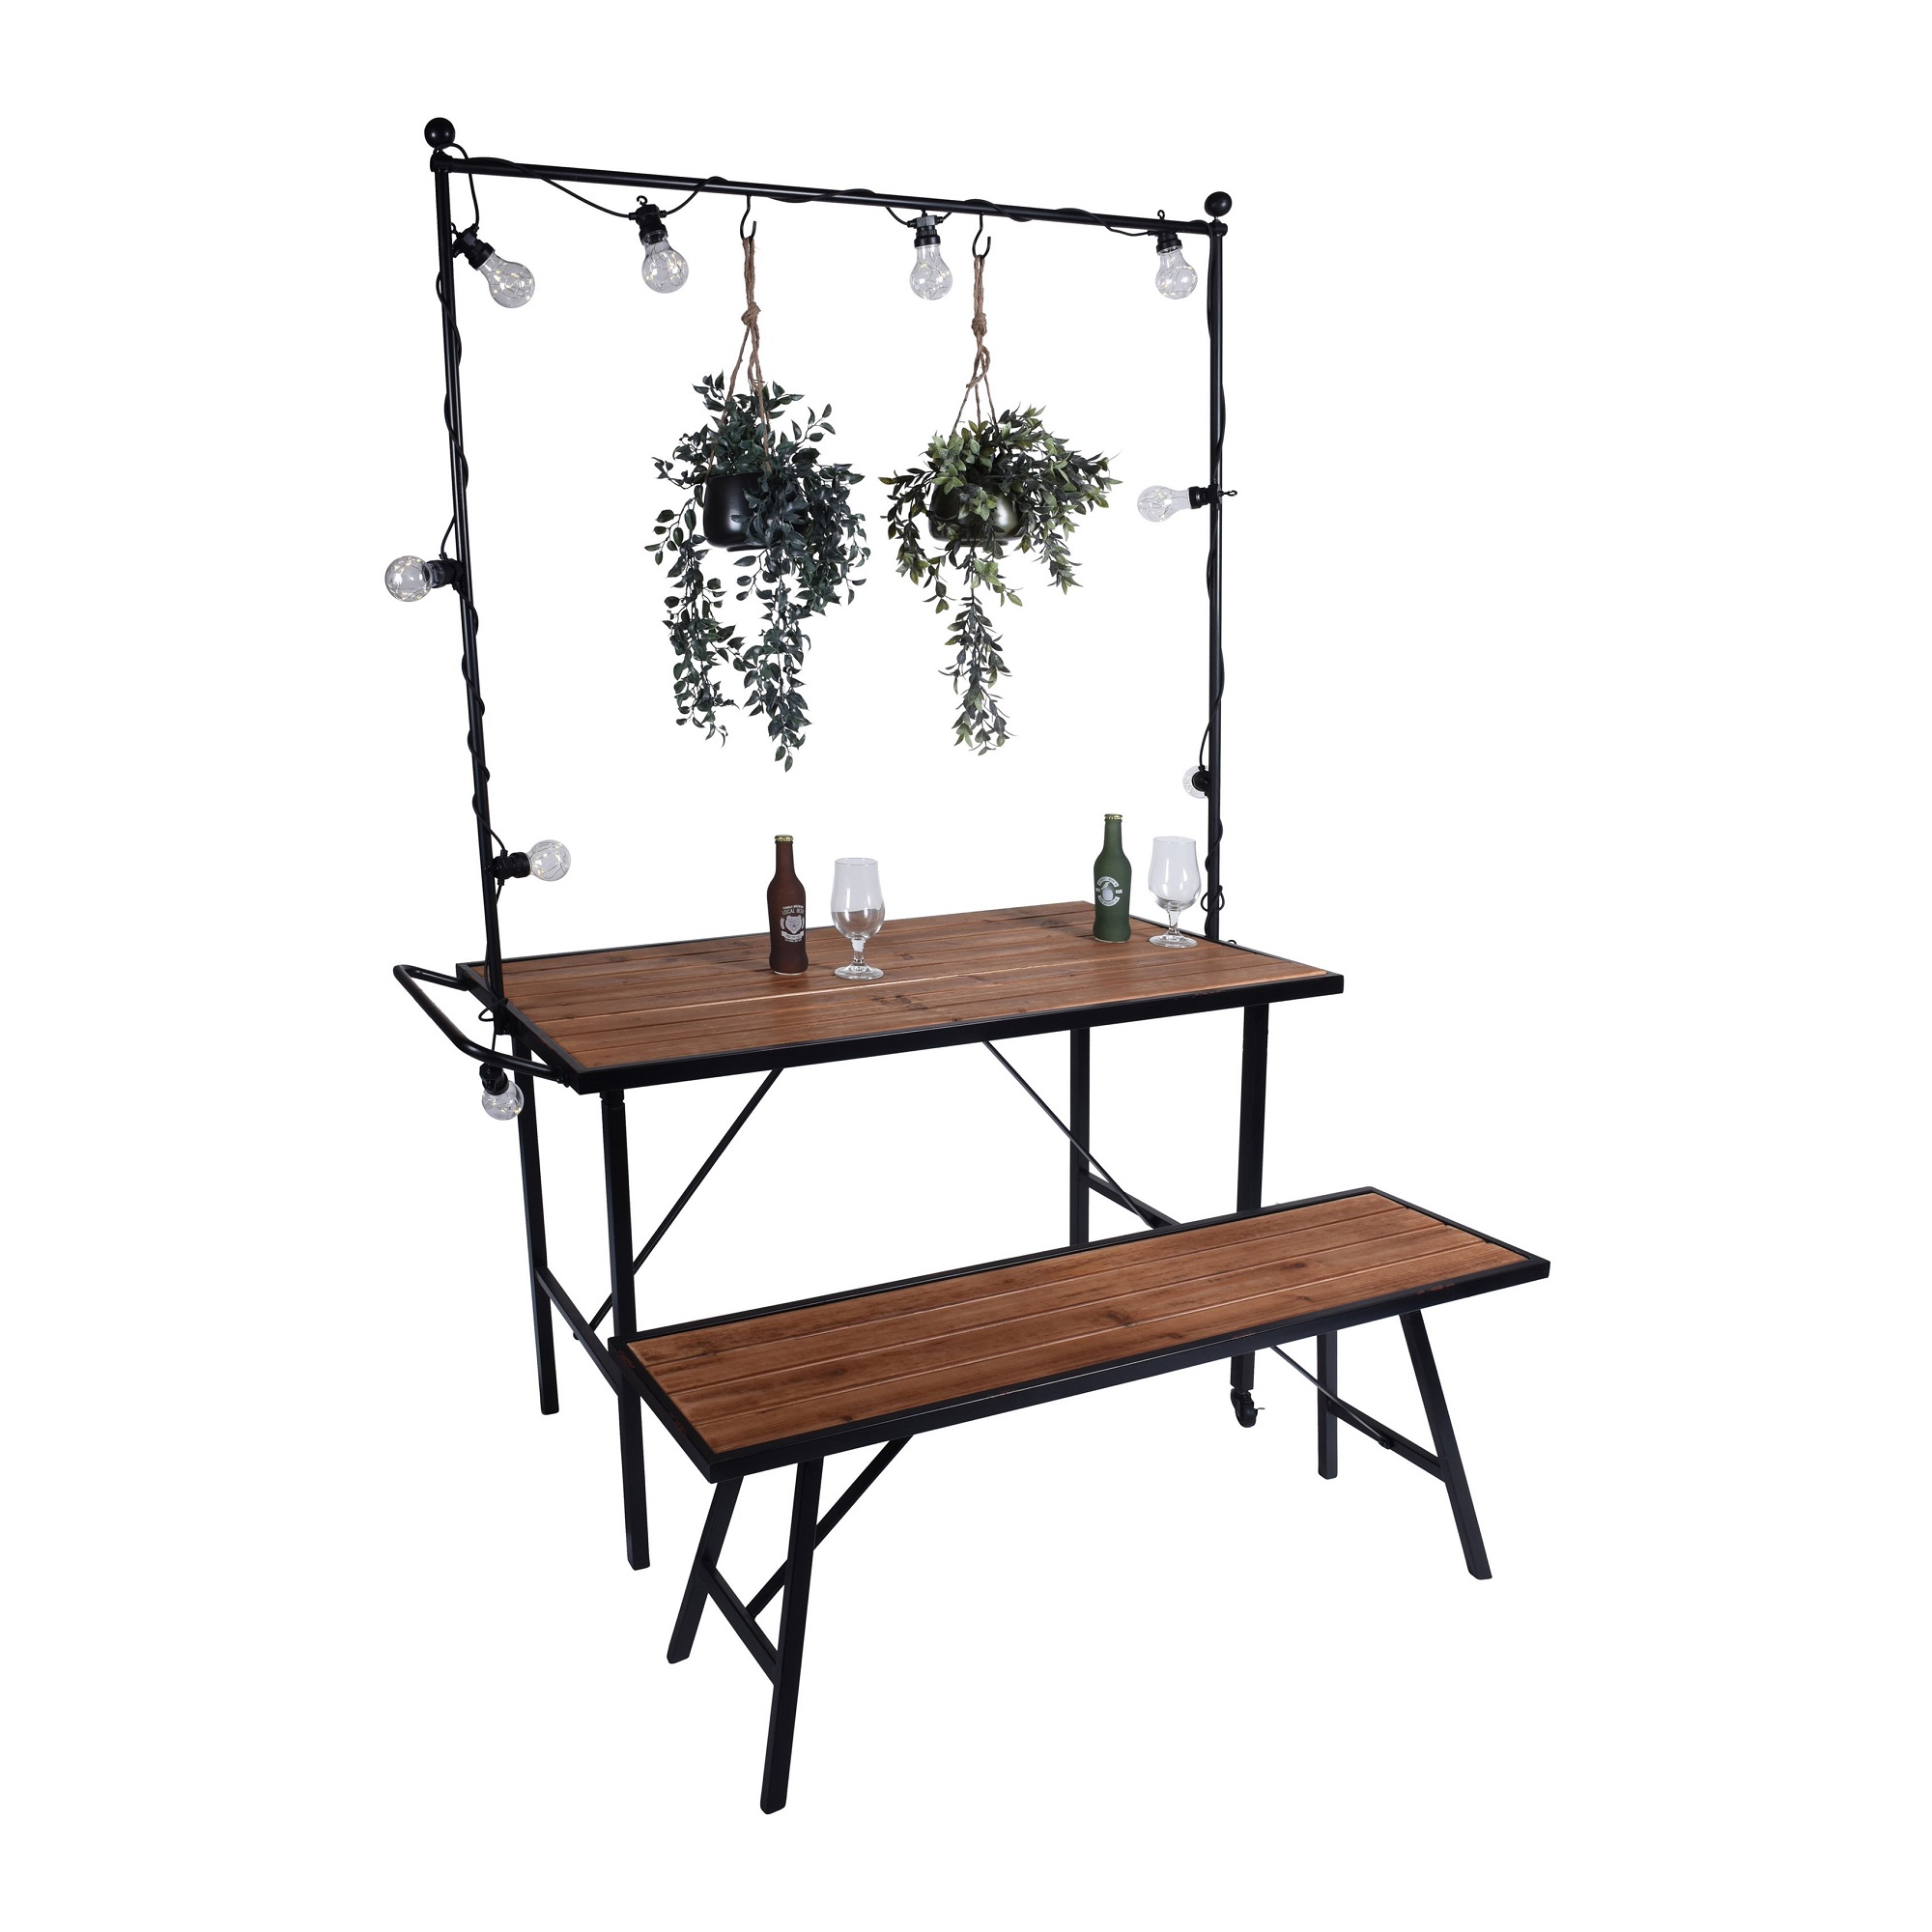 Стол для пикника со скамейками Koopman furniture, цвет темно-коричневый, размер 58x133x78 - фото 1